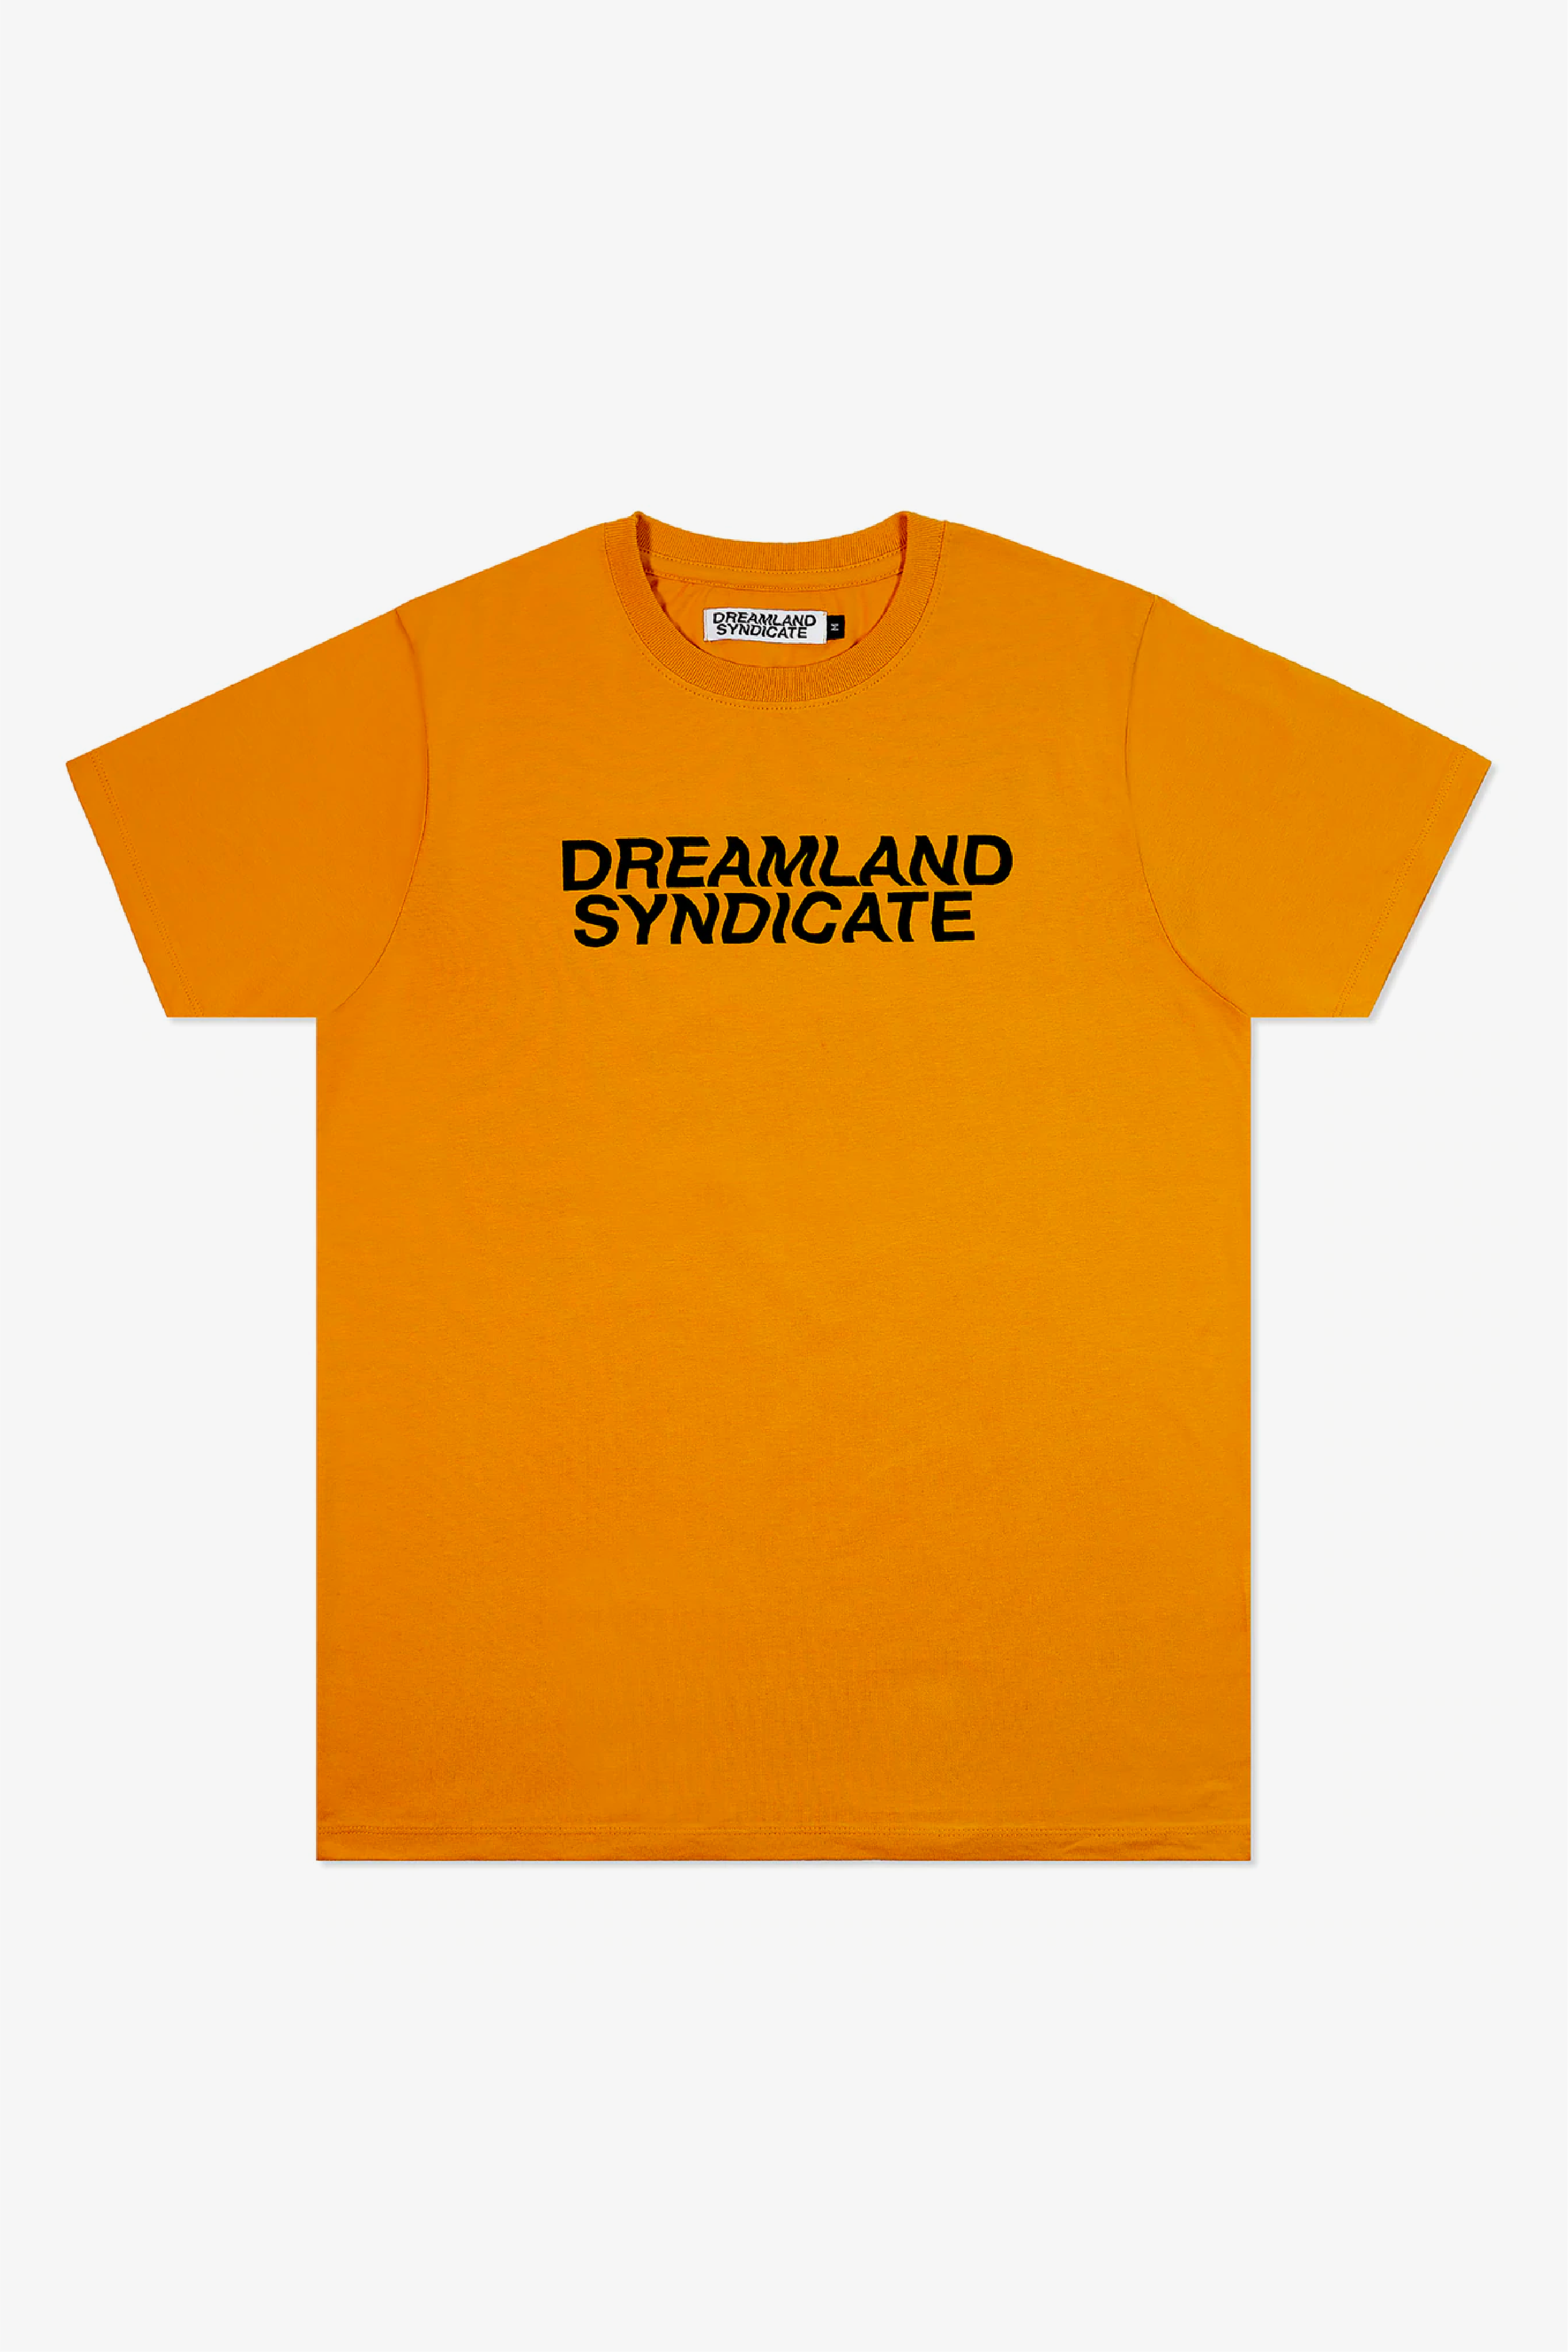 Selectshop FRAME - DREAMLAND SYNDICATE Core Elements Eco Tee T-Shirts Dubai